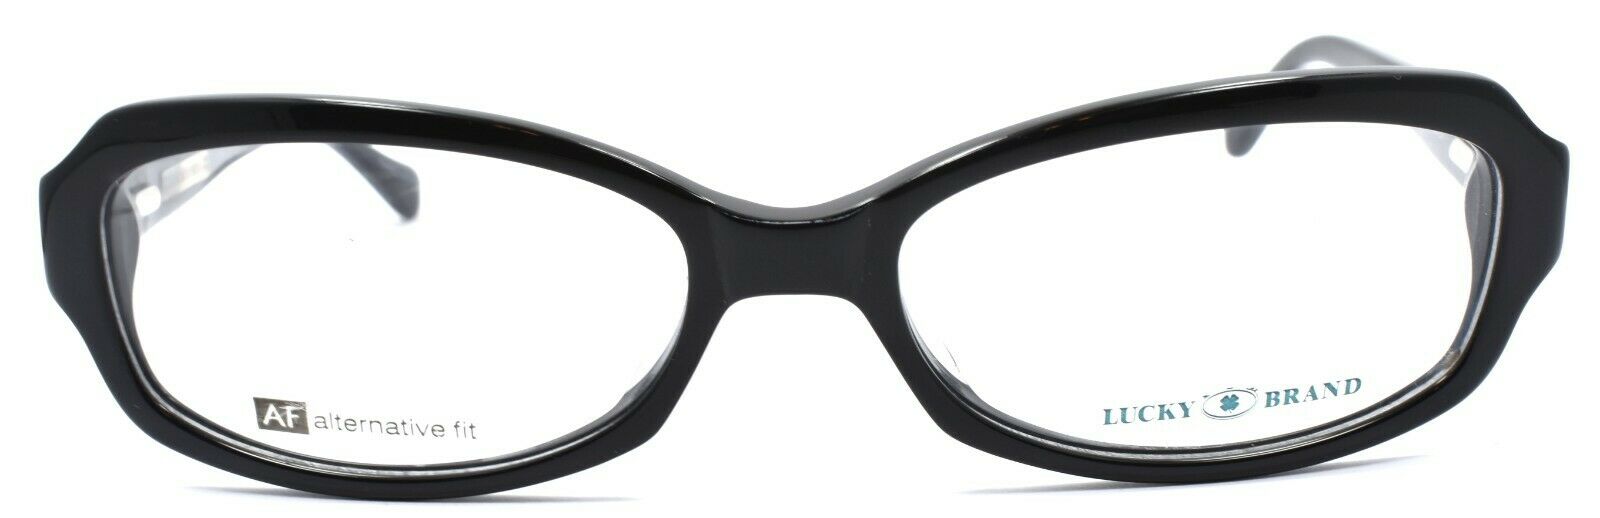 2-LUCKY BRAND Savannah AF Women's Eyeglasses Frames 55-17-135 Black + CASE-751286229240-IKSpecs